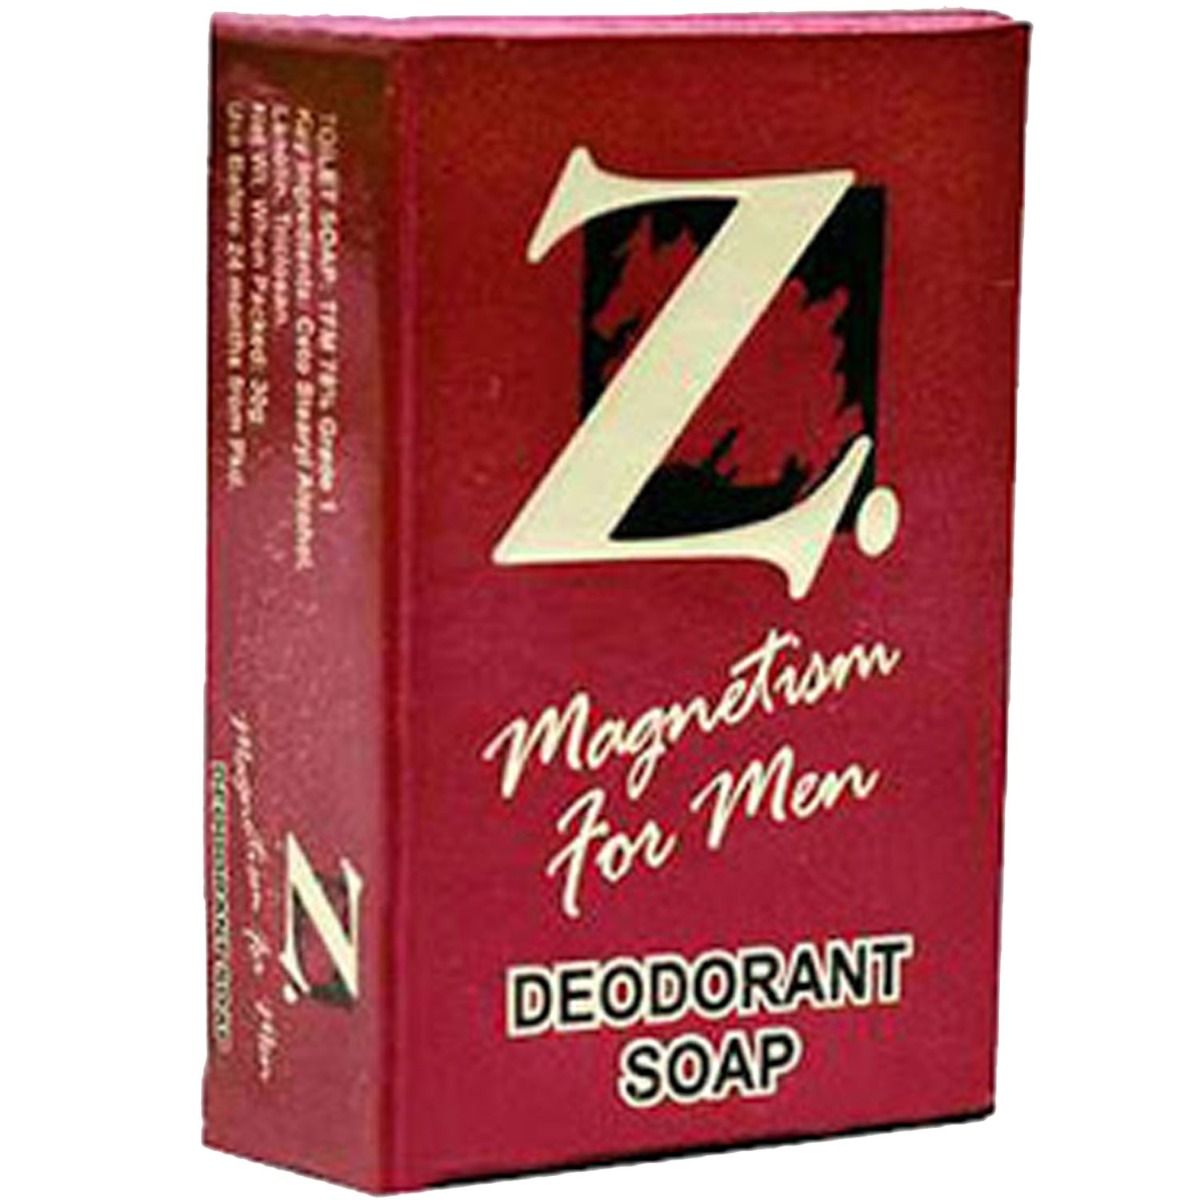 Z Deodorant Soap Magnetism For Men, 75 gm, Pack of 1 